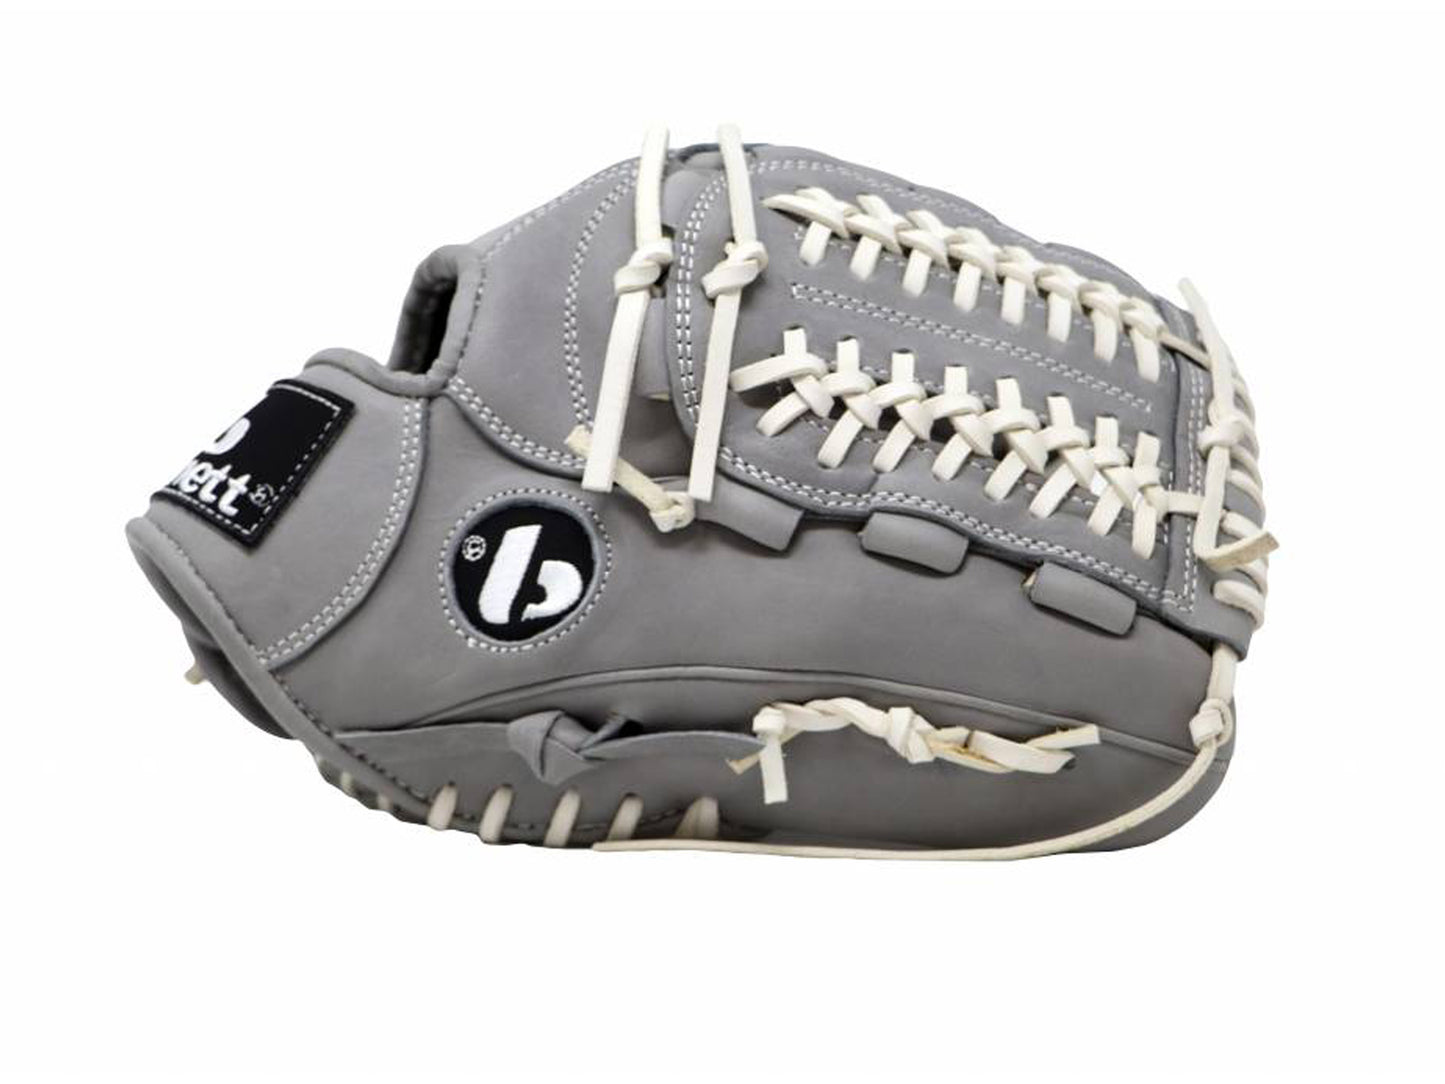 FL-120 guante de béisbol de alta calidad infield/outfield/pitcher 12, gris claro